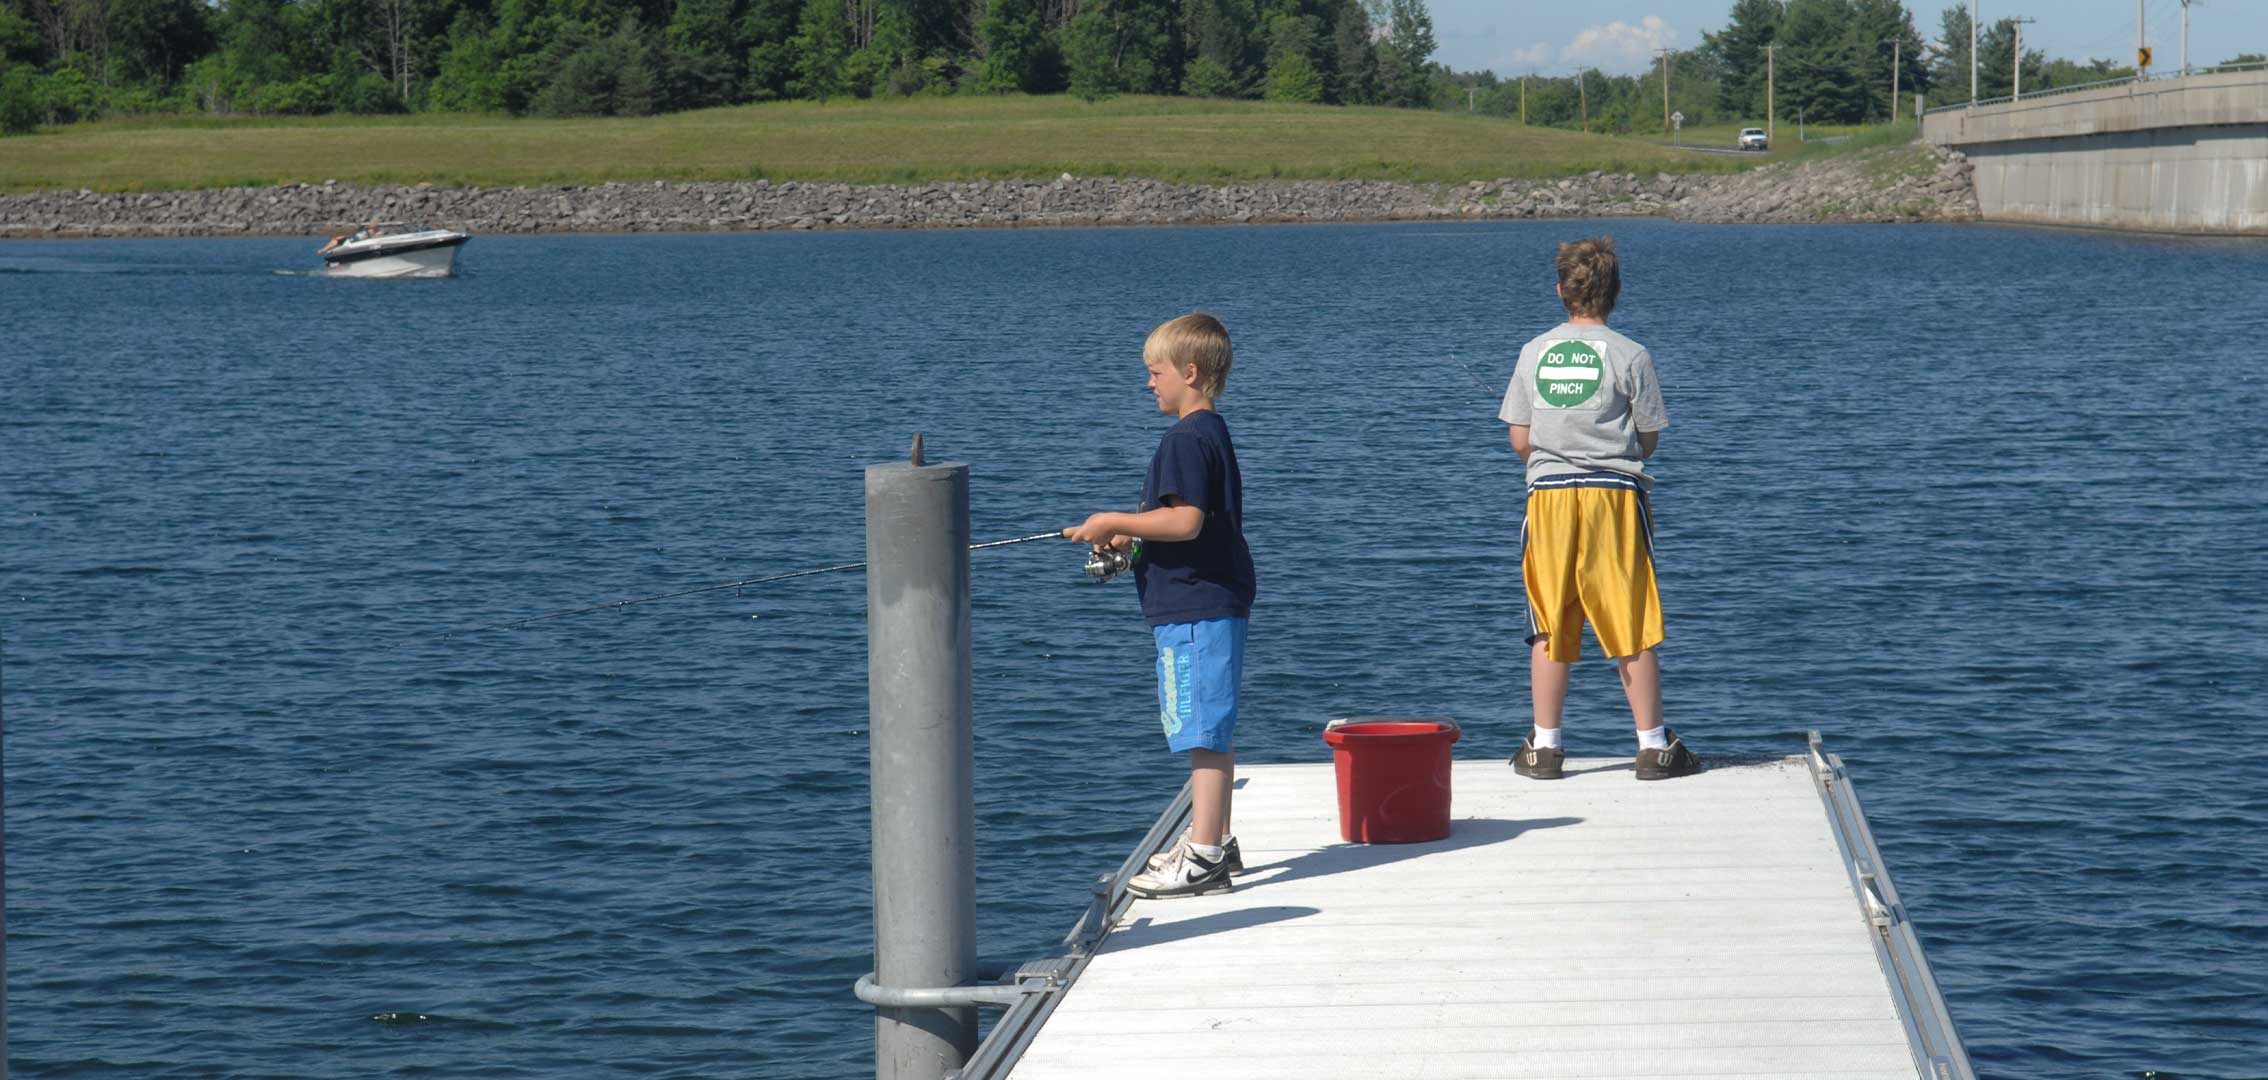 Children enjoying recreational fishing